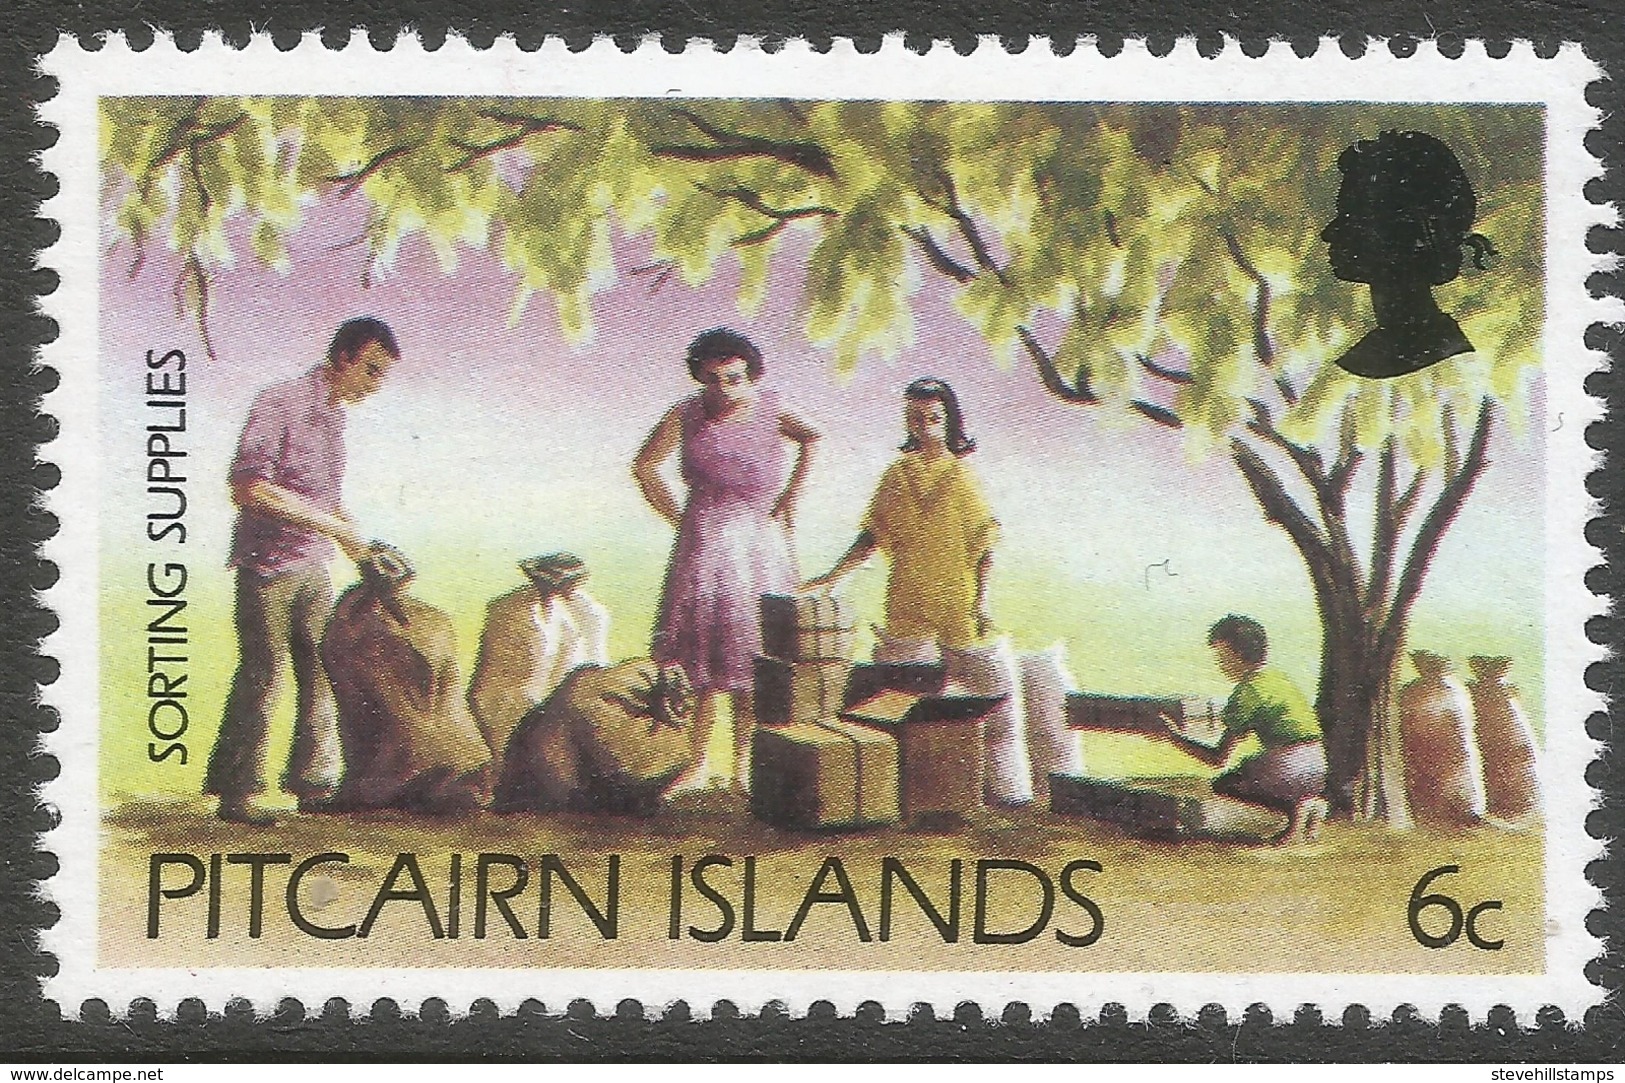 Pitcairn Islands. 1977 Definitives. 6c MH. SG 177 - Pitcairn Islands